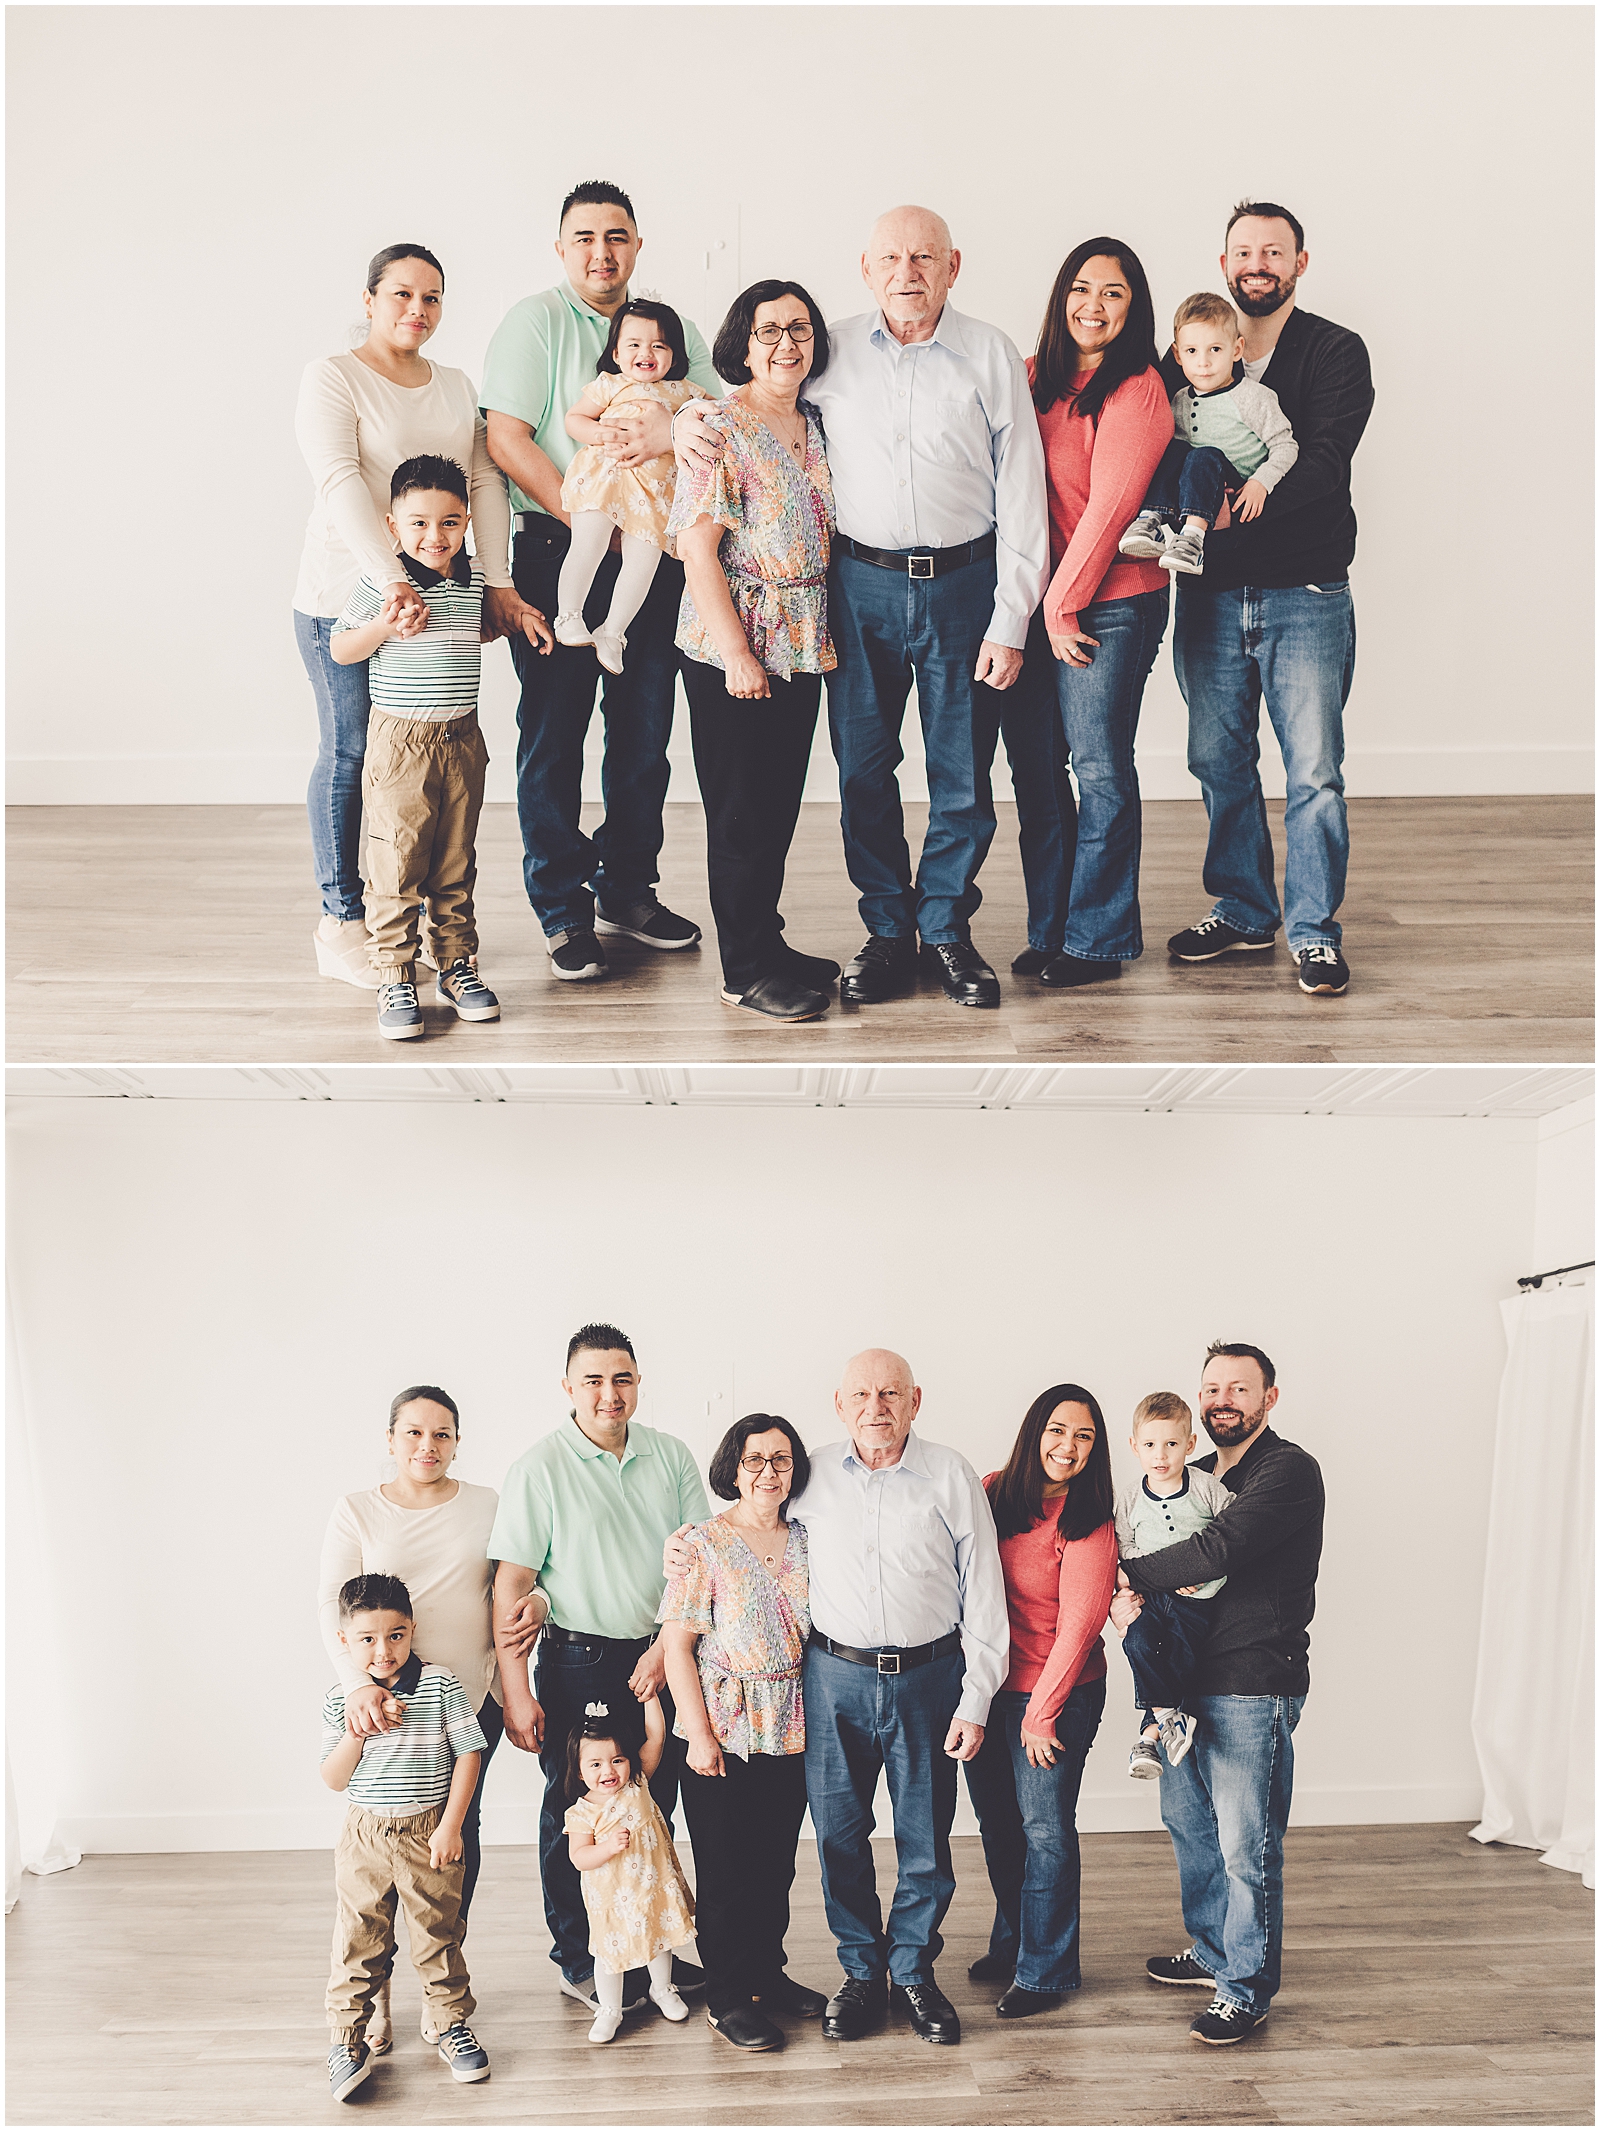 Extended family photos with the Santiago-Nagele family at Kara Evans Photographer - Natural Light Studio Photographer in Kankakee, Illinois.